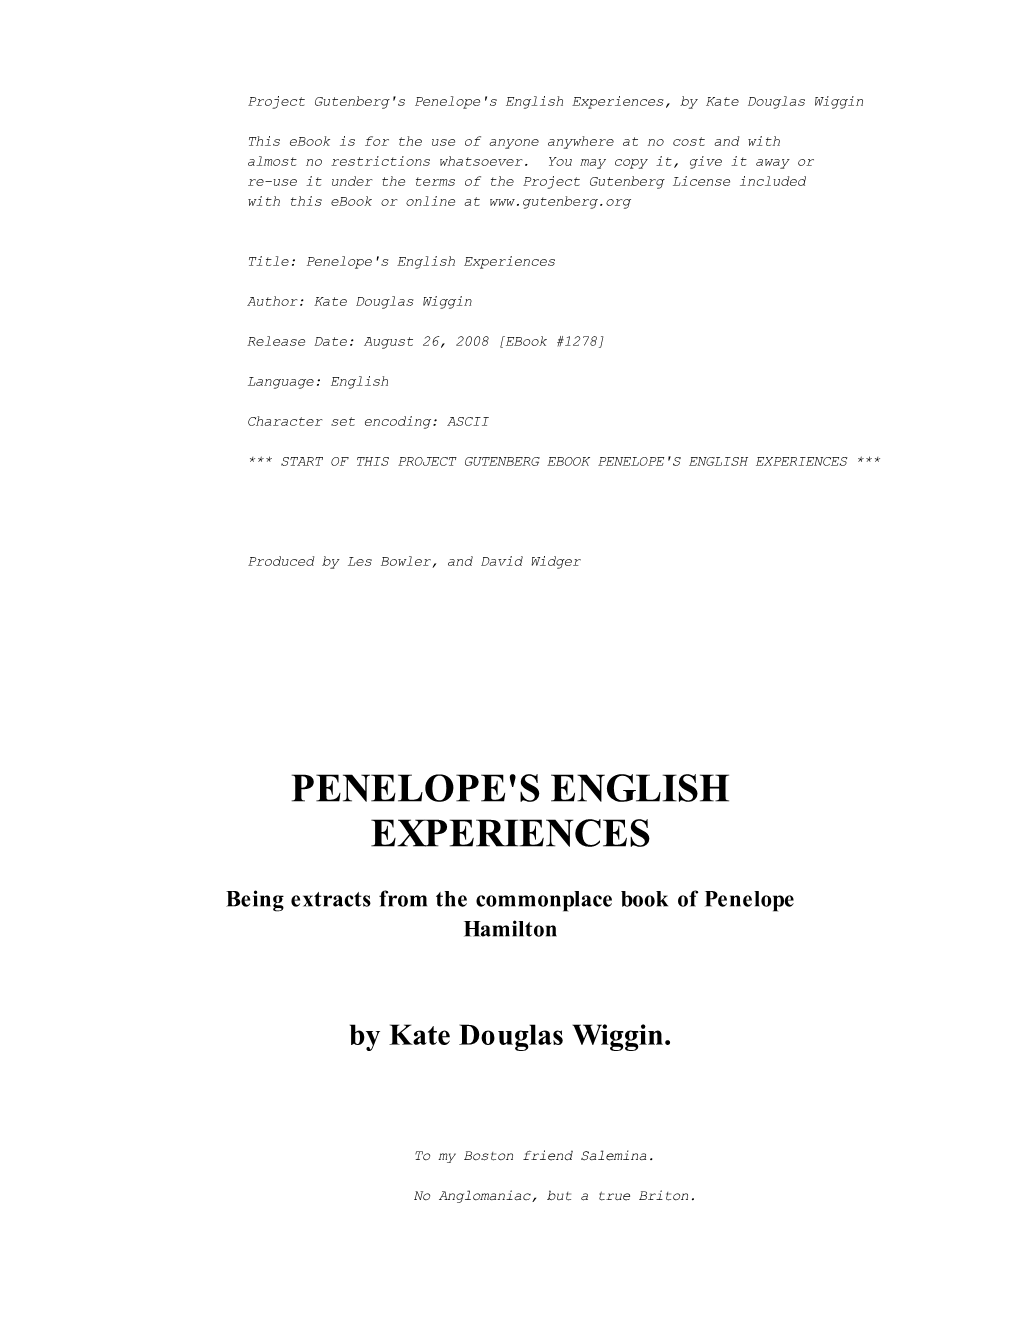 Penelope's English Experiences, by Kate Douglas Wiggin